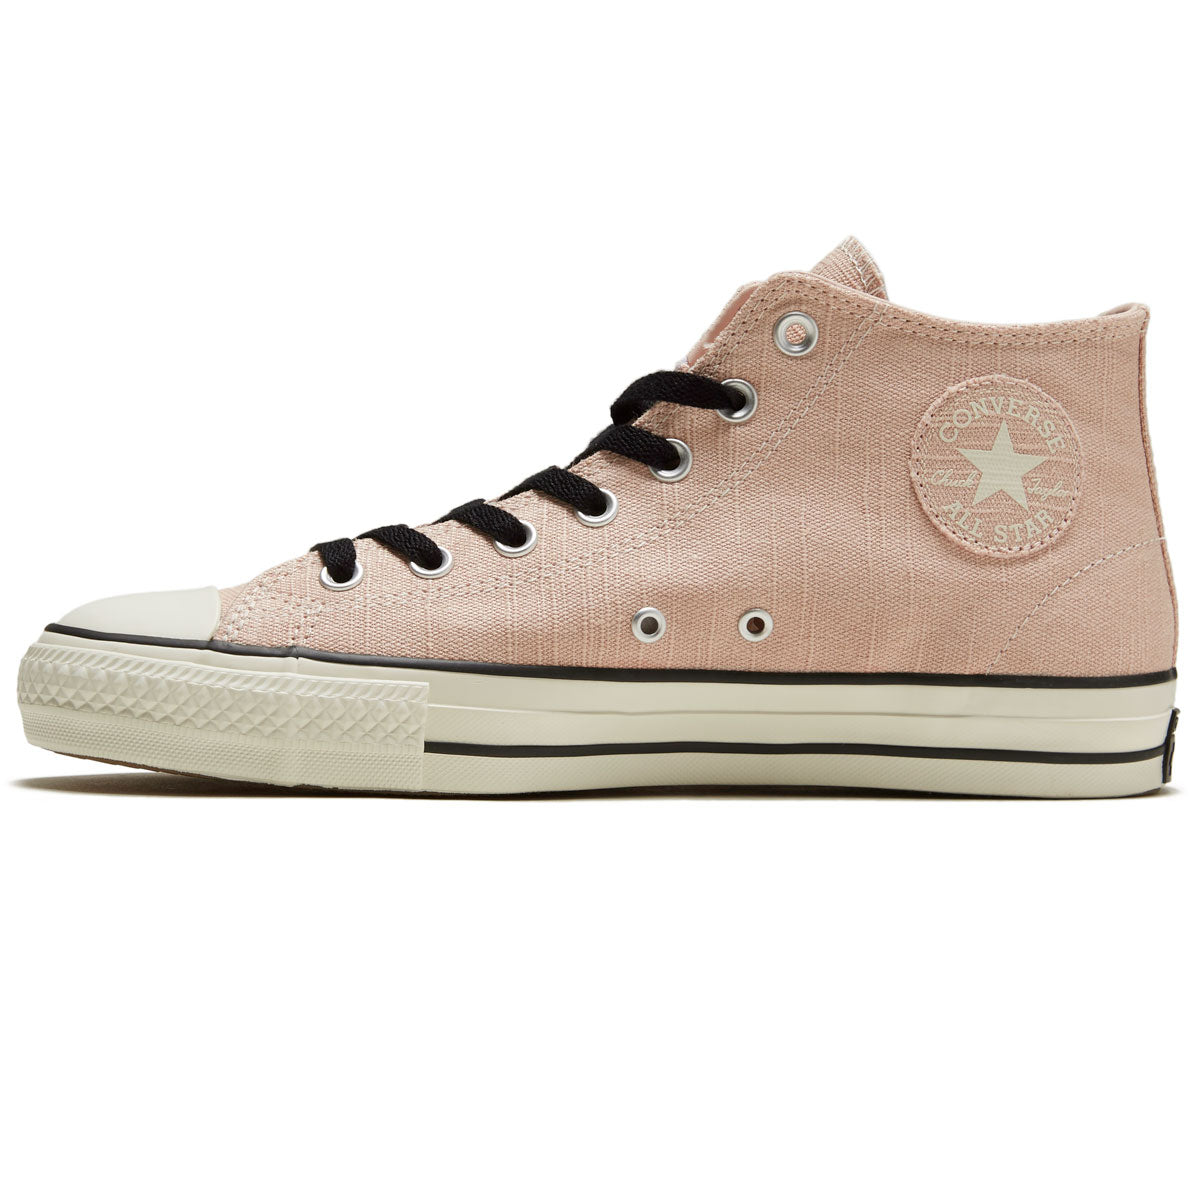 Converse Chuck Taylor All Star Pro Hemp Mid Shoes - Pink Sage/Egret/Black image 2